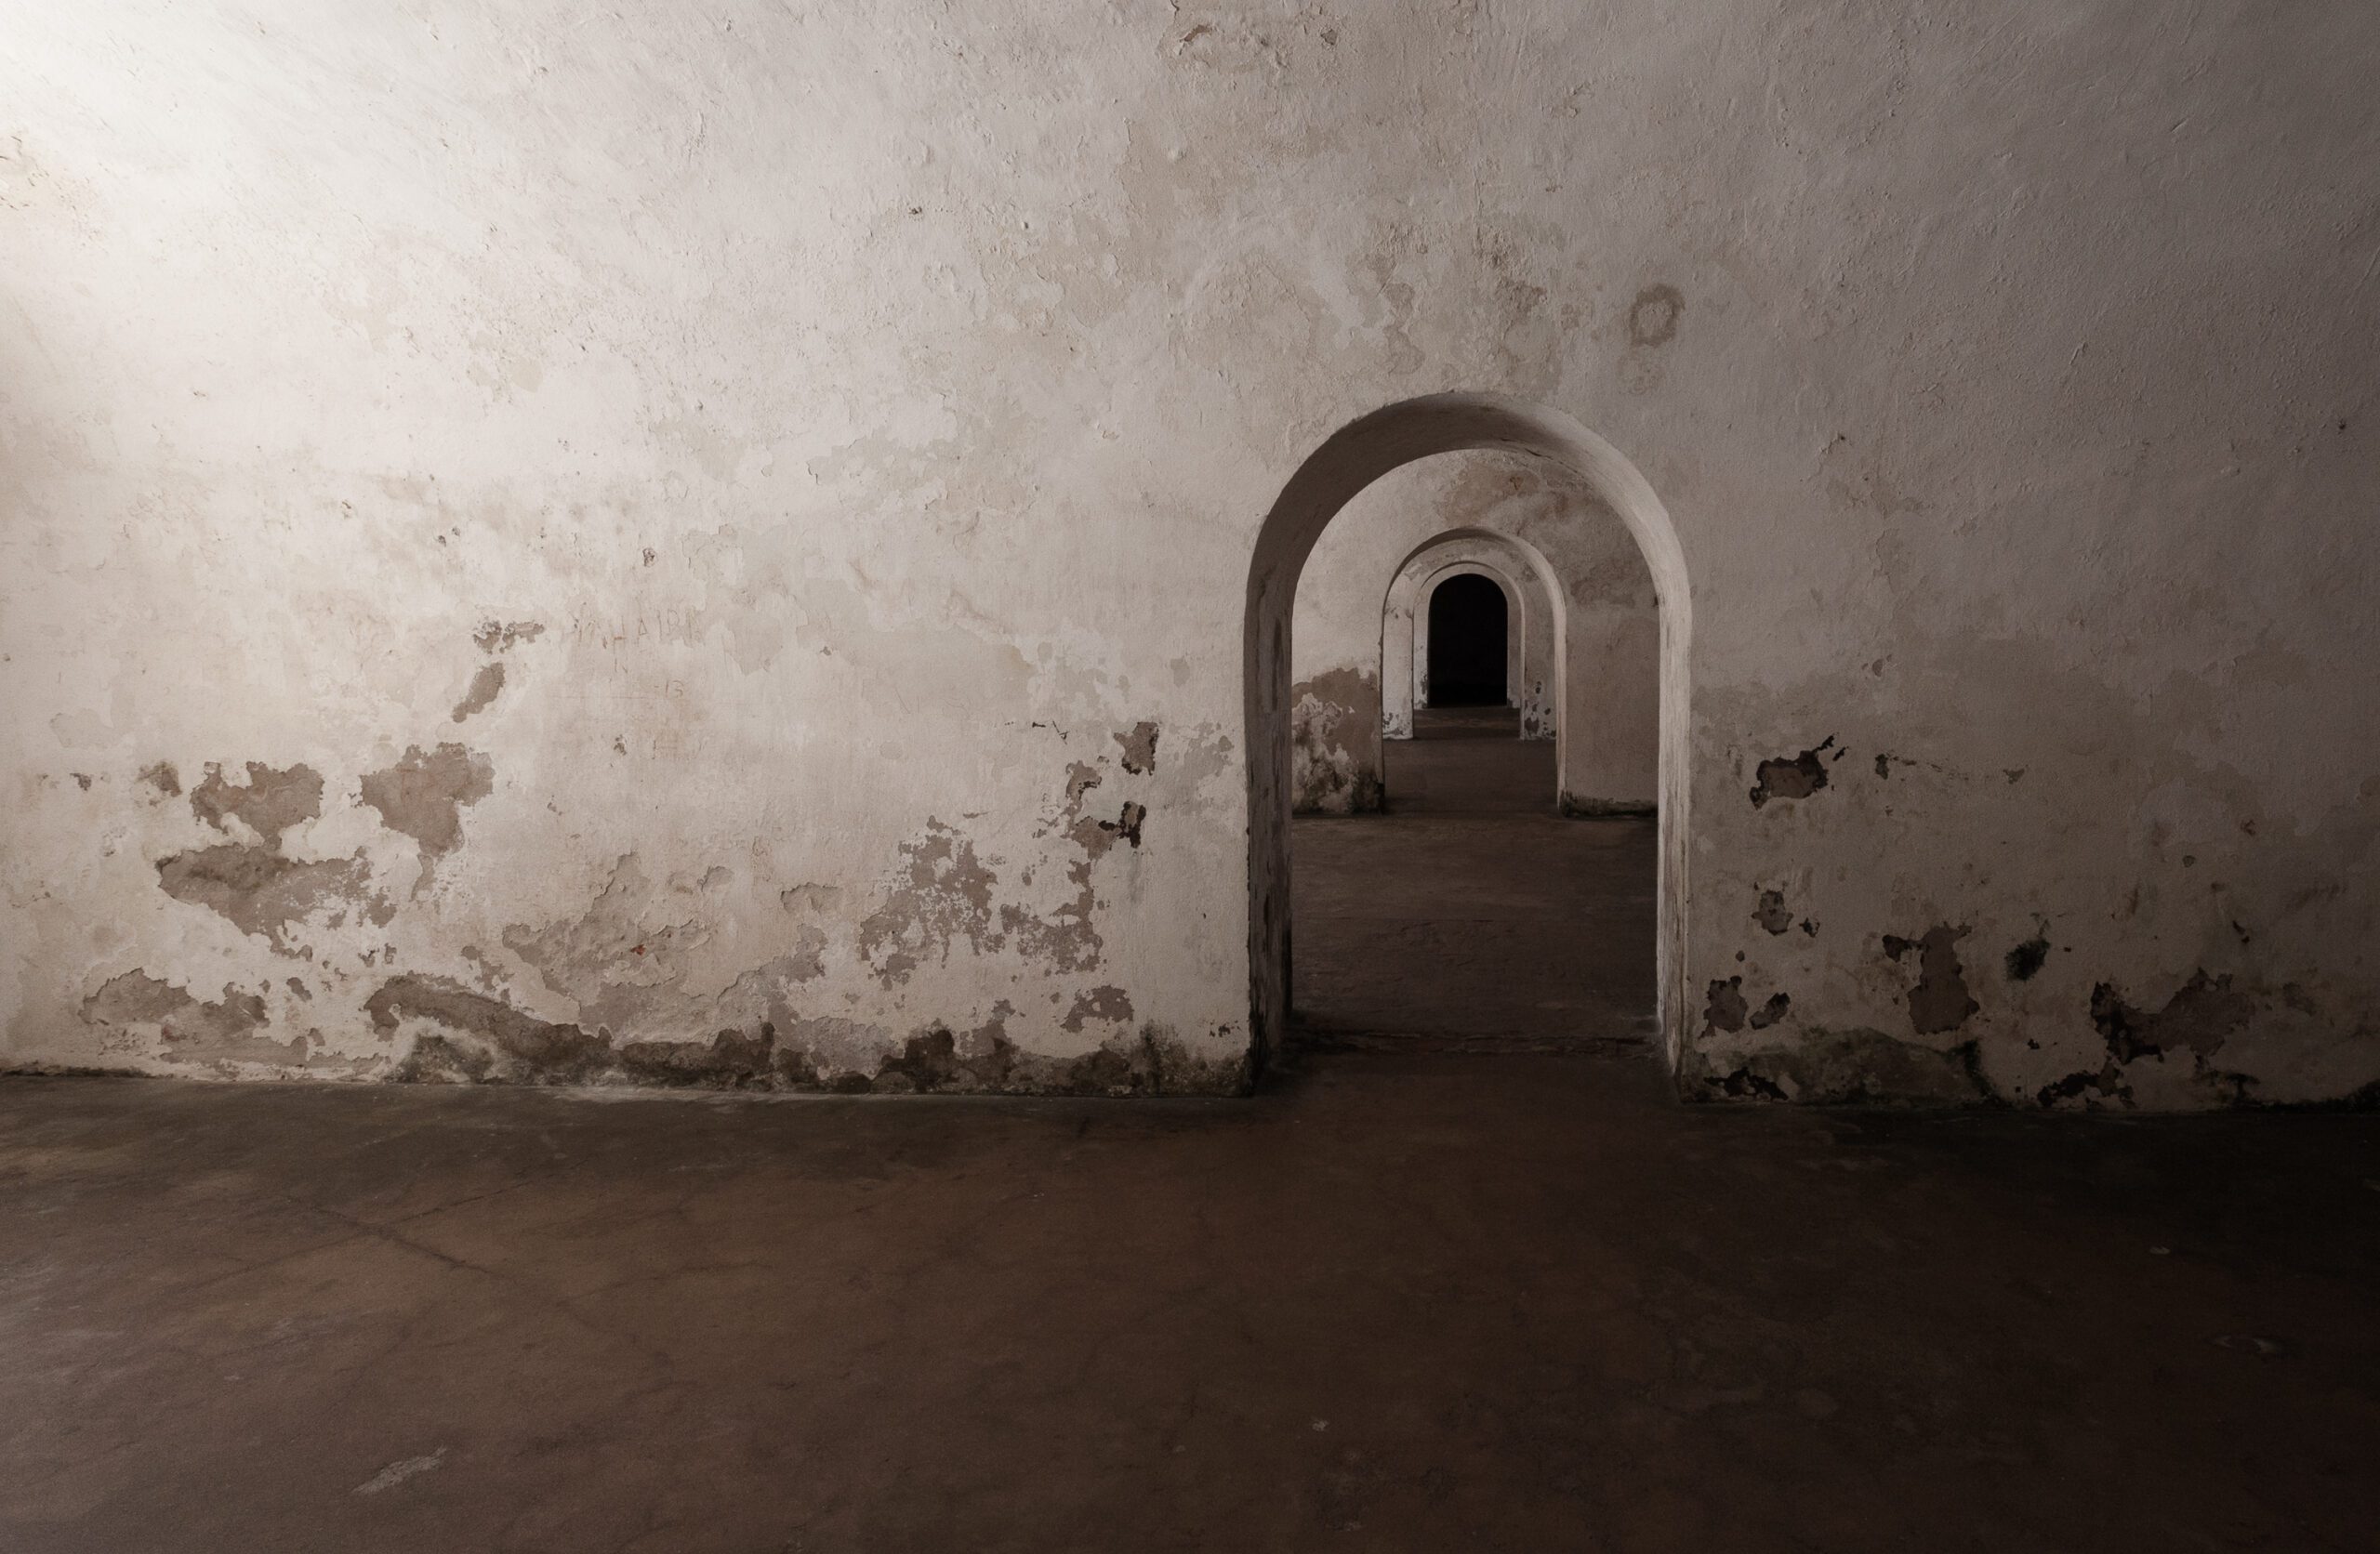 Unveil the mysteries of Castillo San Felipe del Morro through this captivating series of ancient doorways, Old San Juan, Puerto Rico